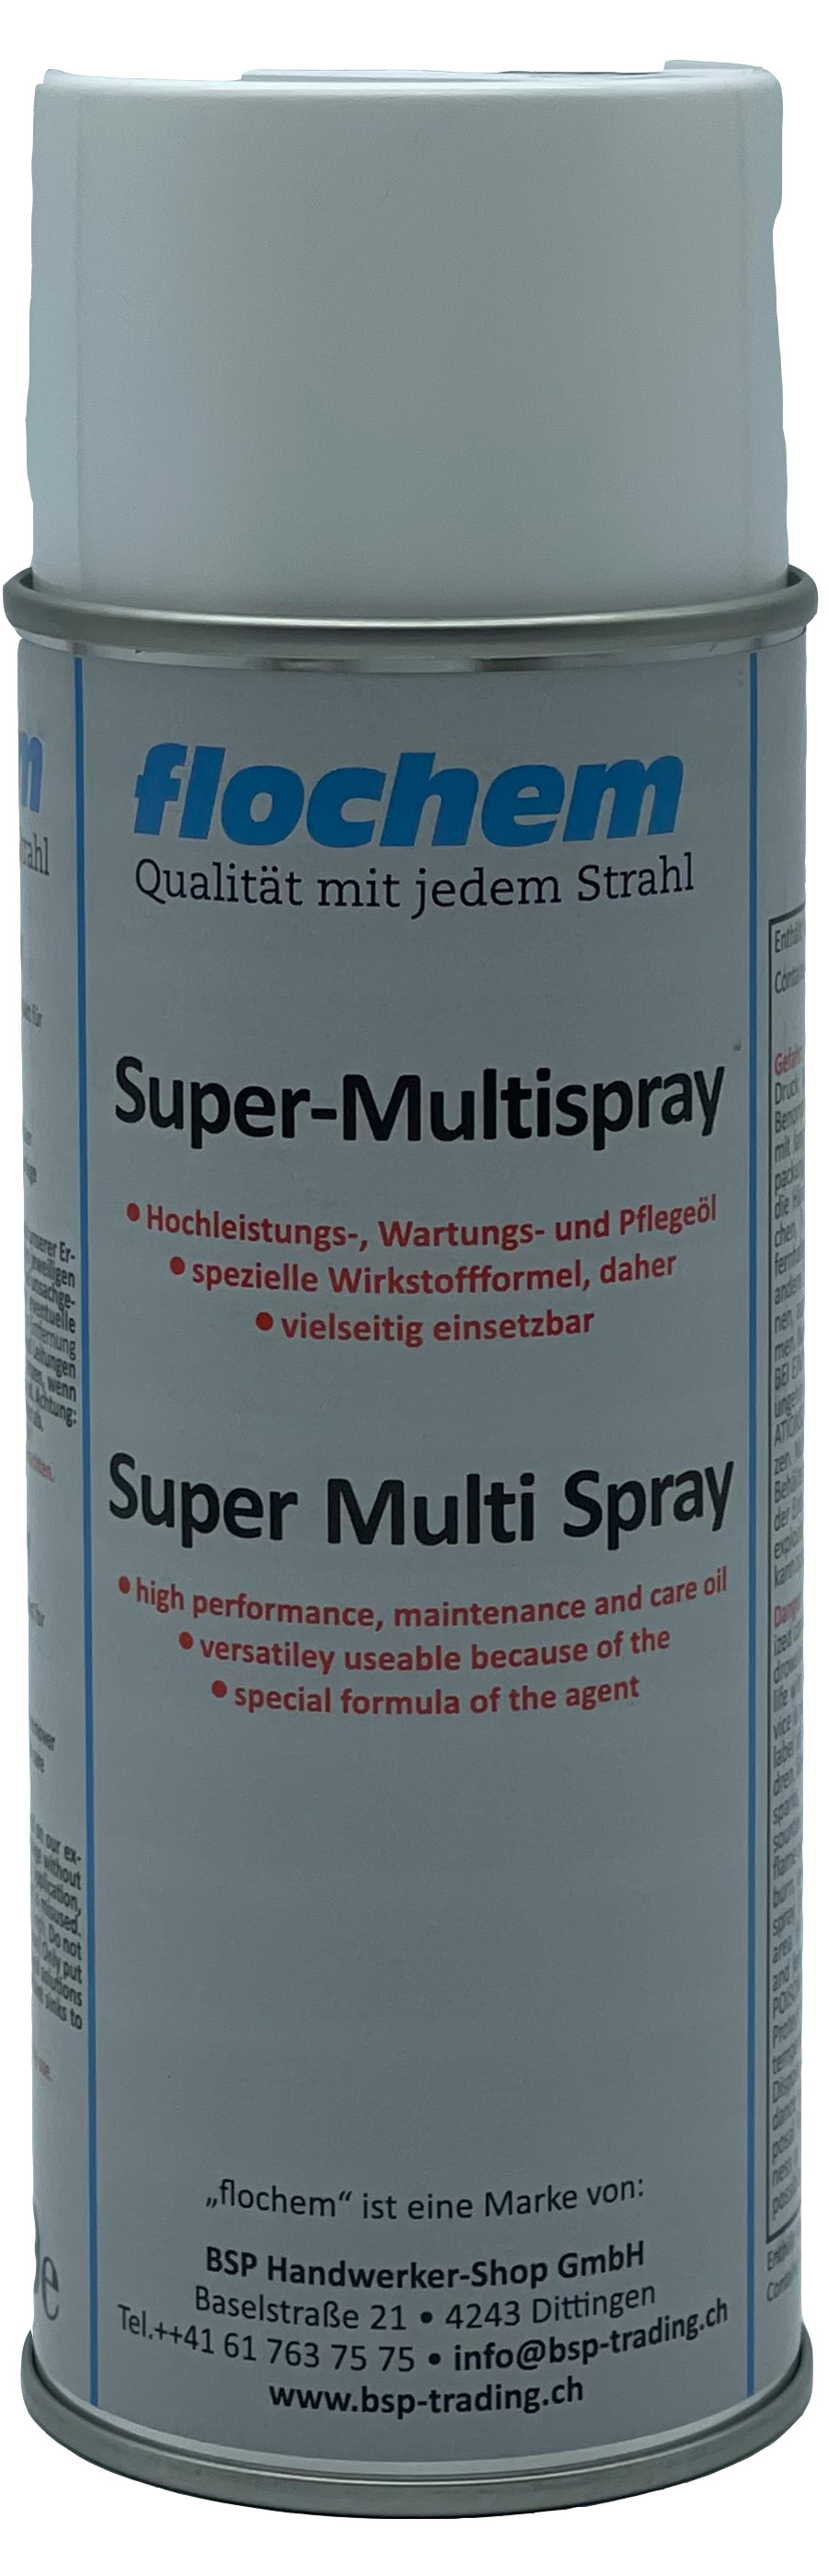 Super-Multispray 400ml